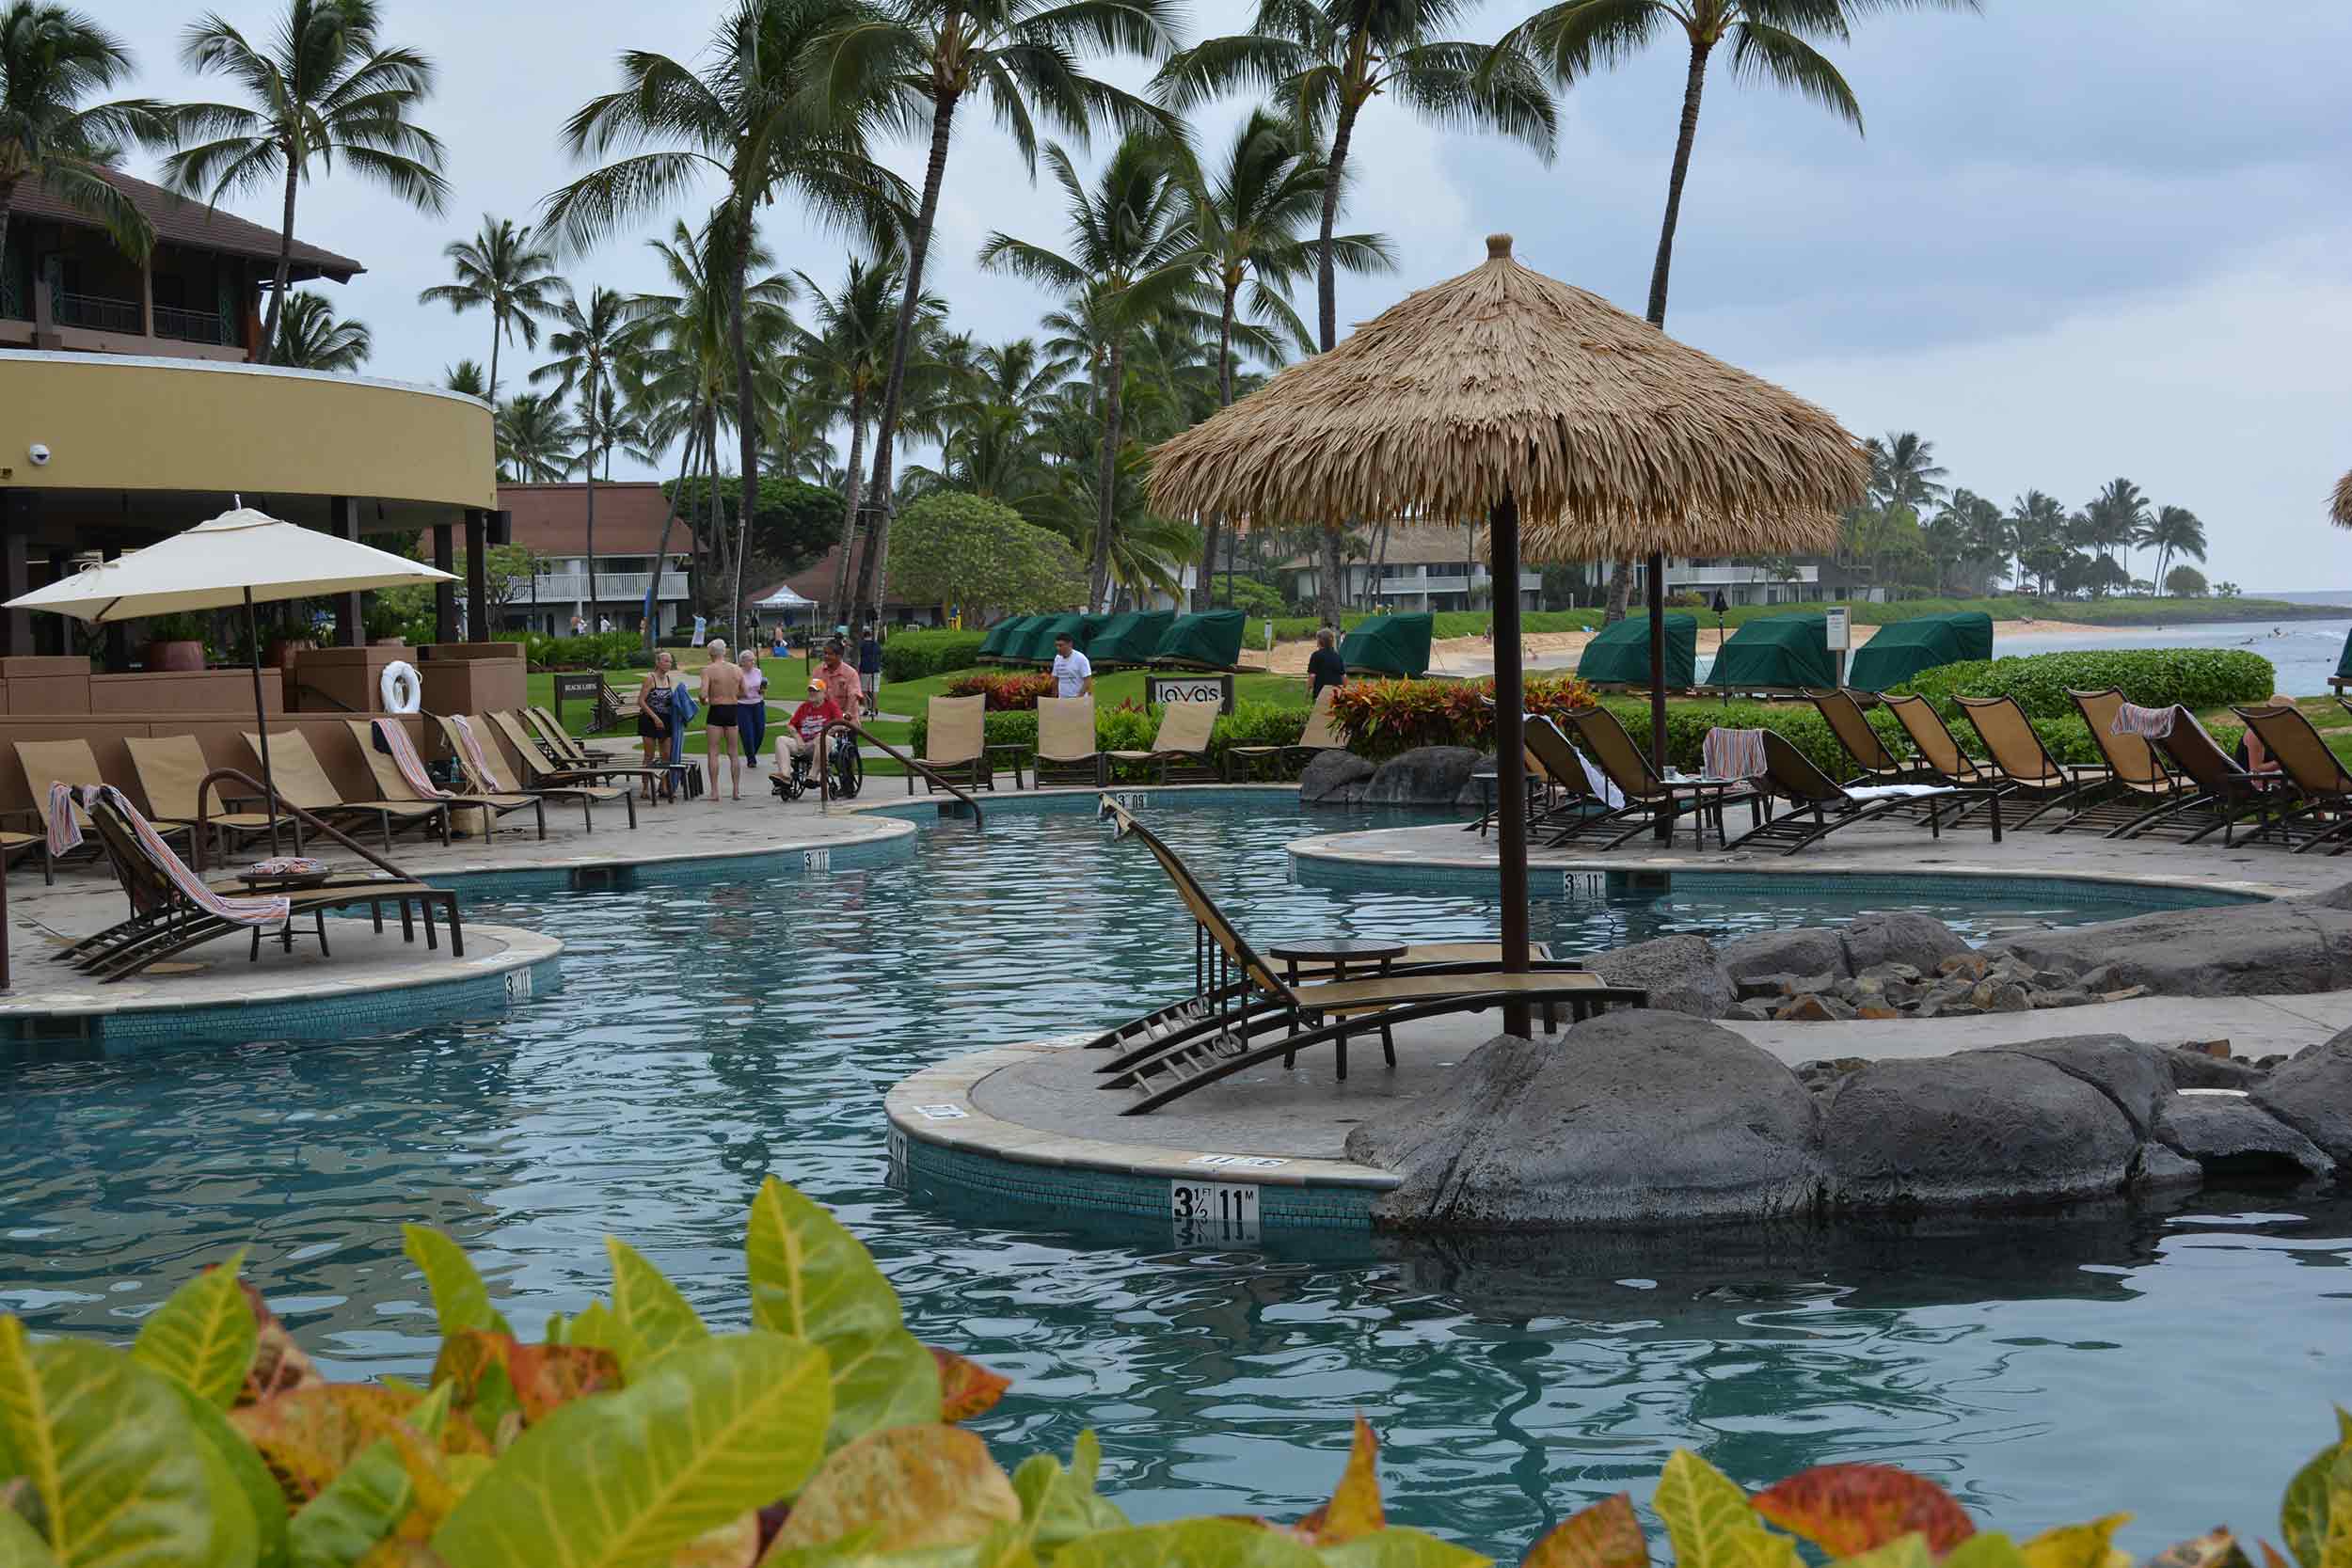 Landscaping for the Sheraton Kauai Resort pool in Koloa Hi